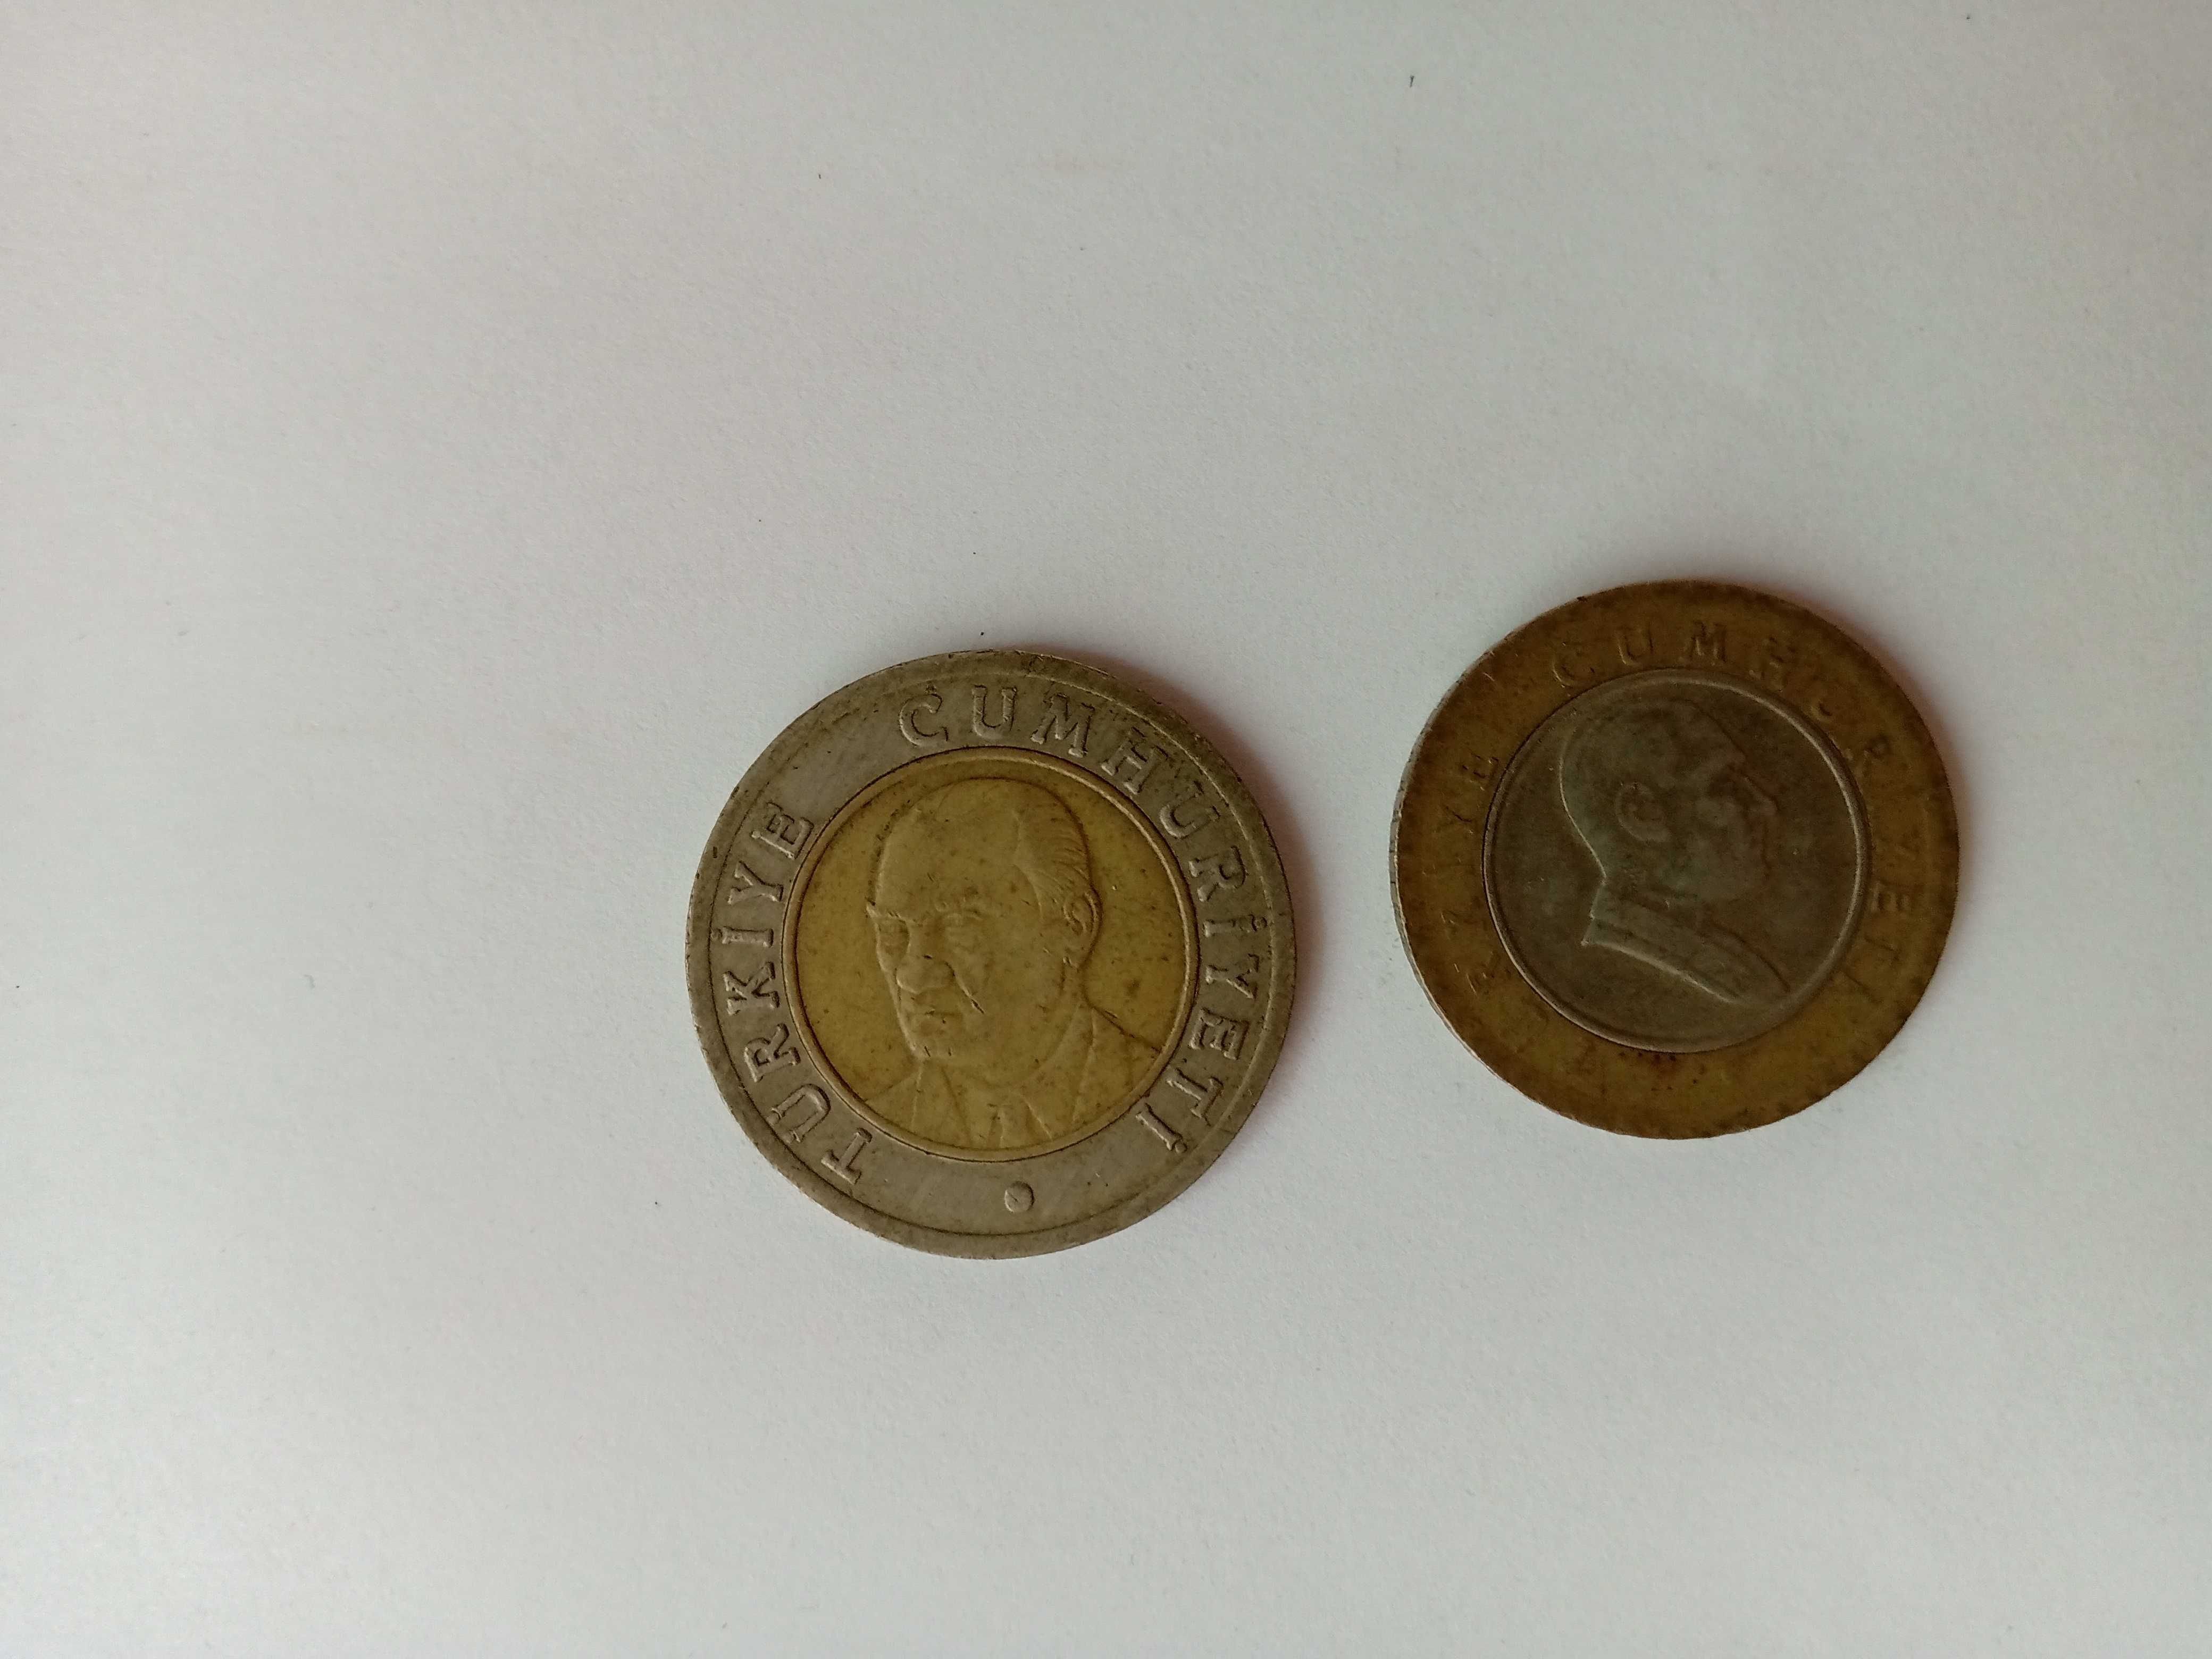 Турецкие монеты Лиры 2005